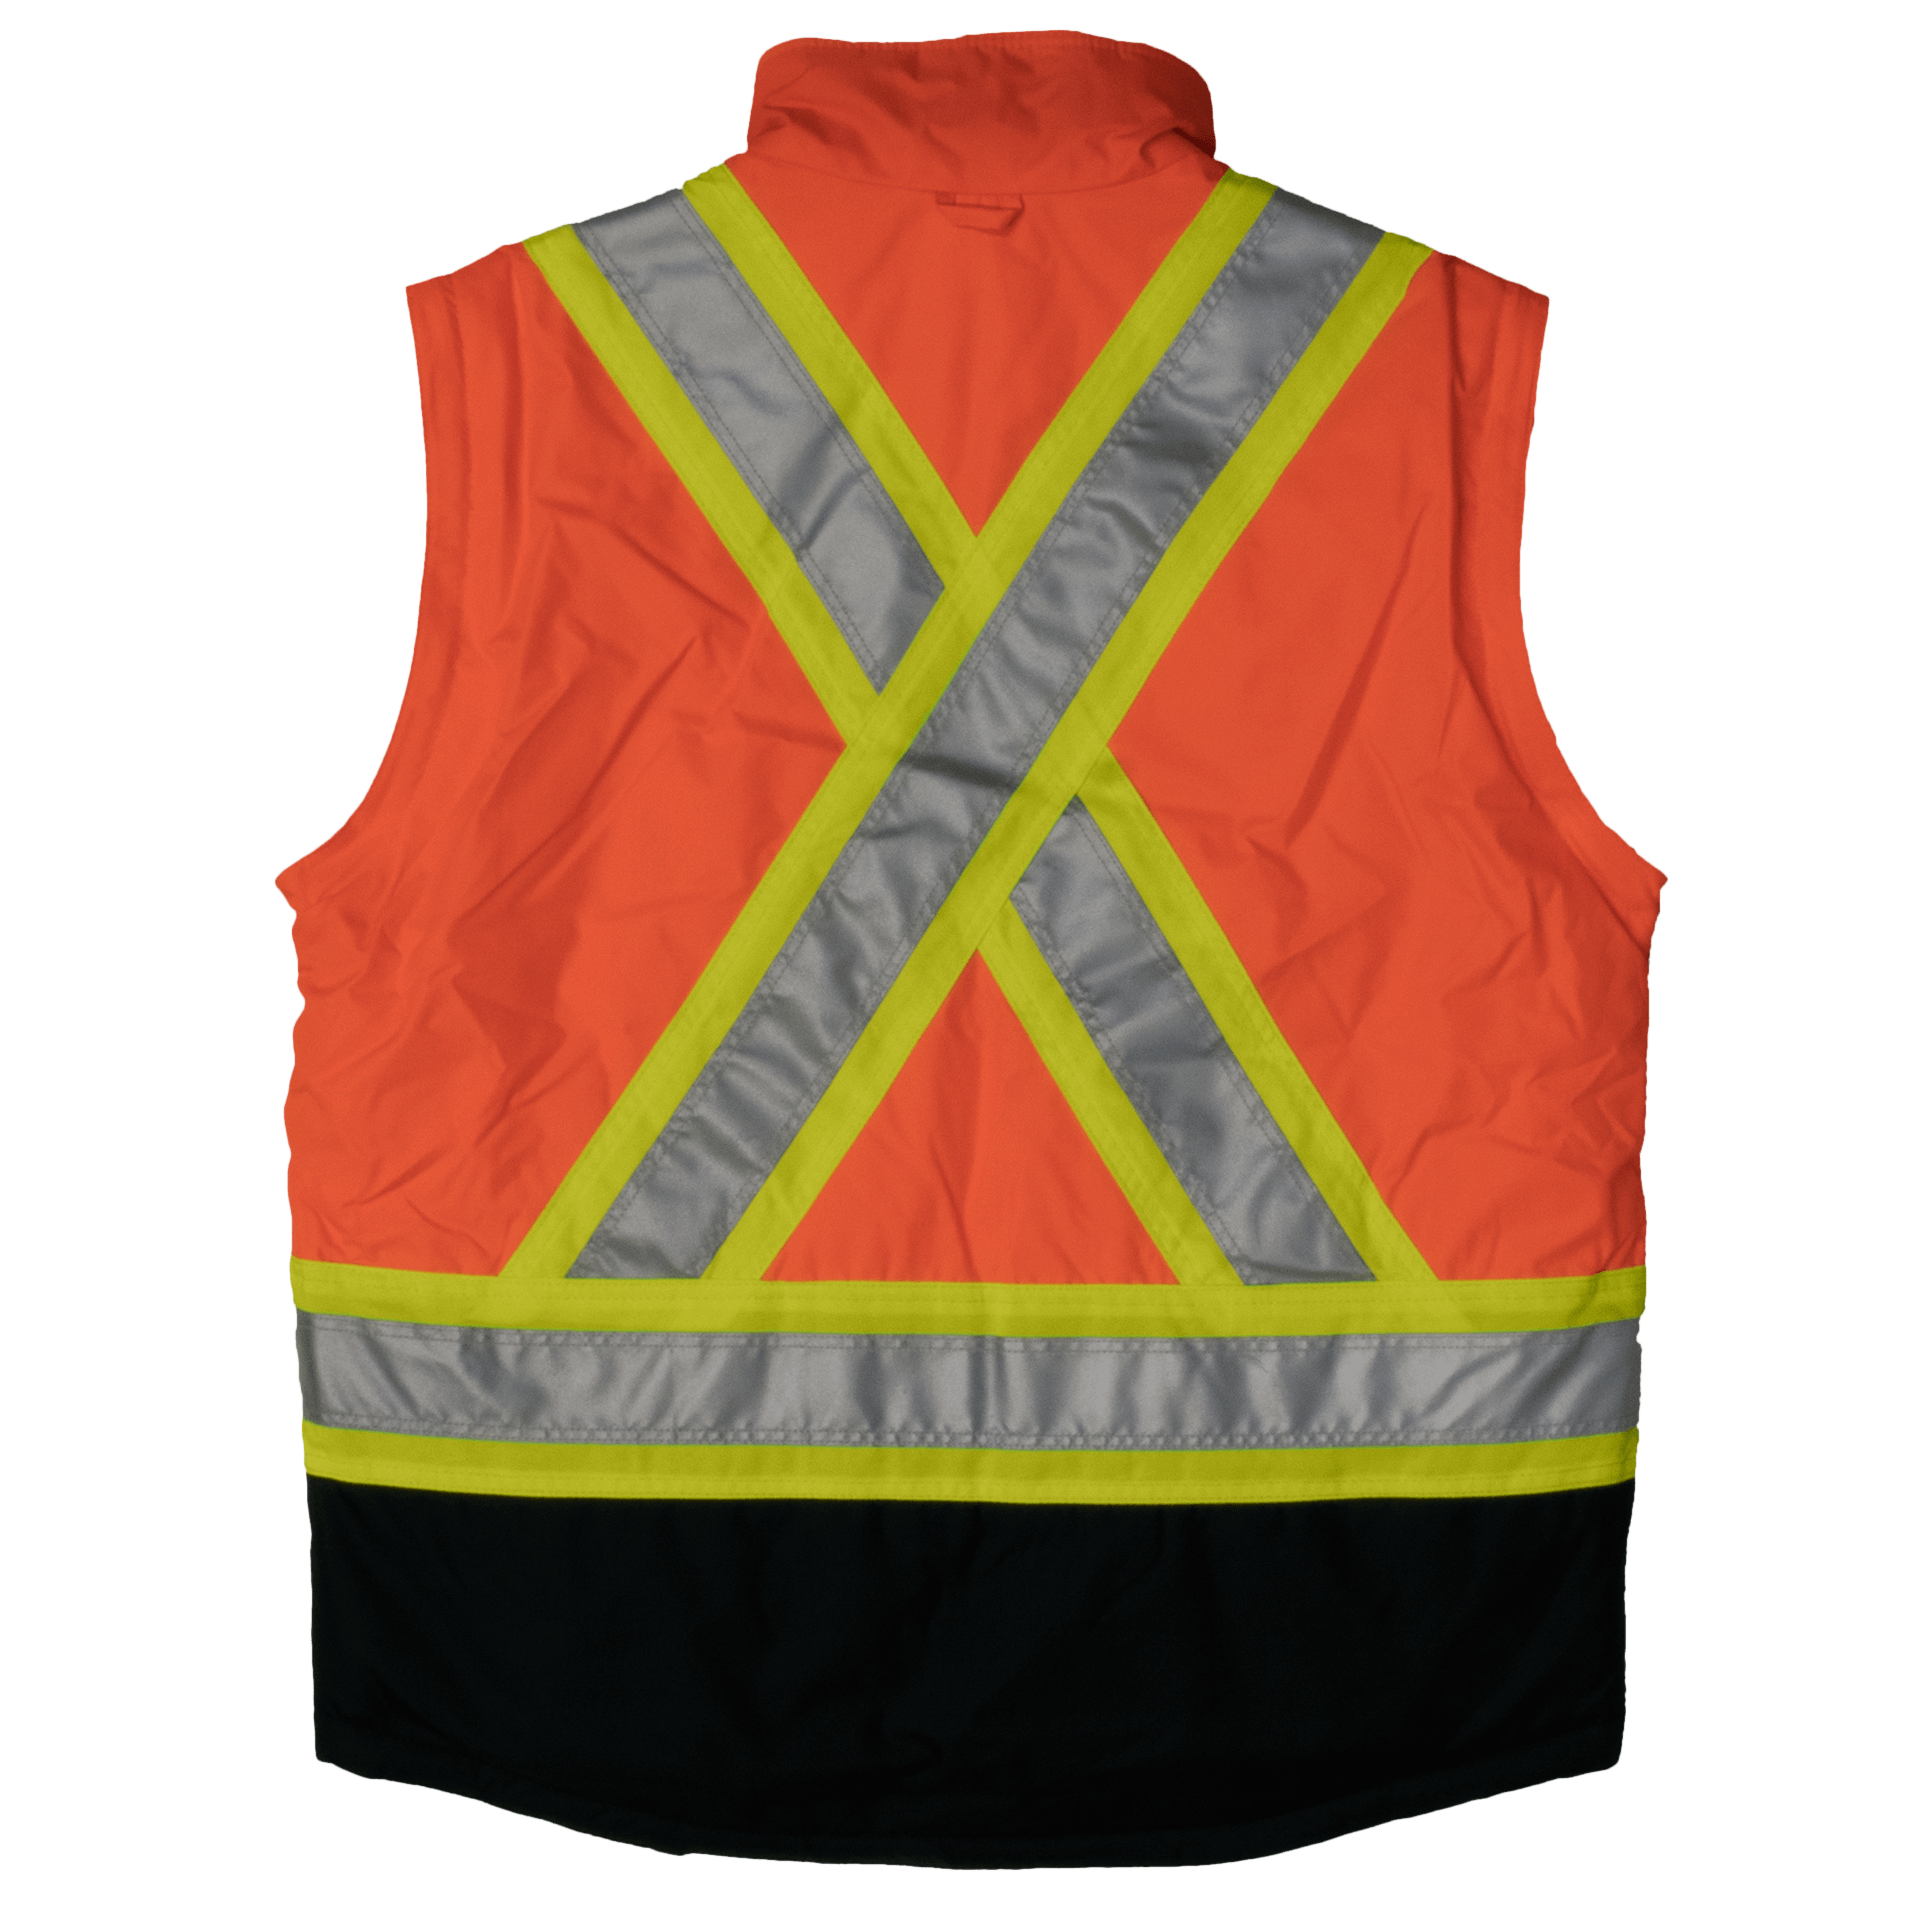 Tough Duck 5-in-1 Safety Jacket - S426 - Fluorescent Orange - vest- back